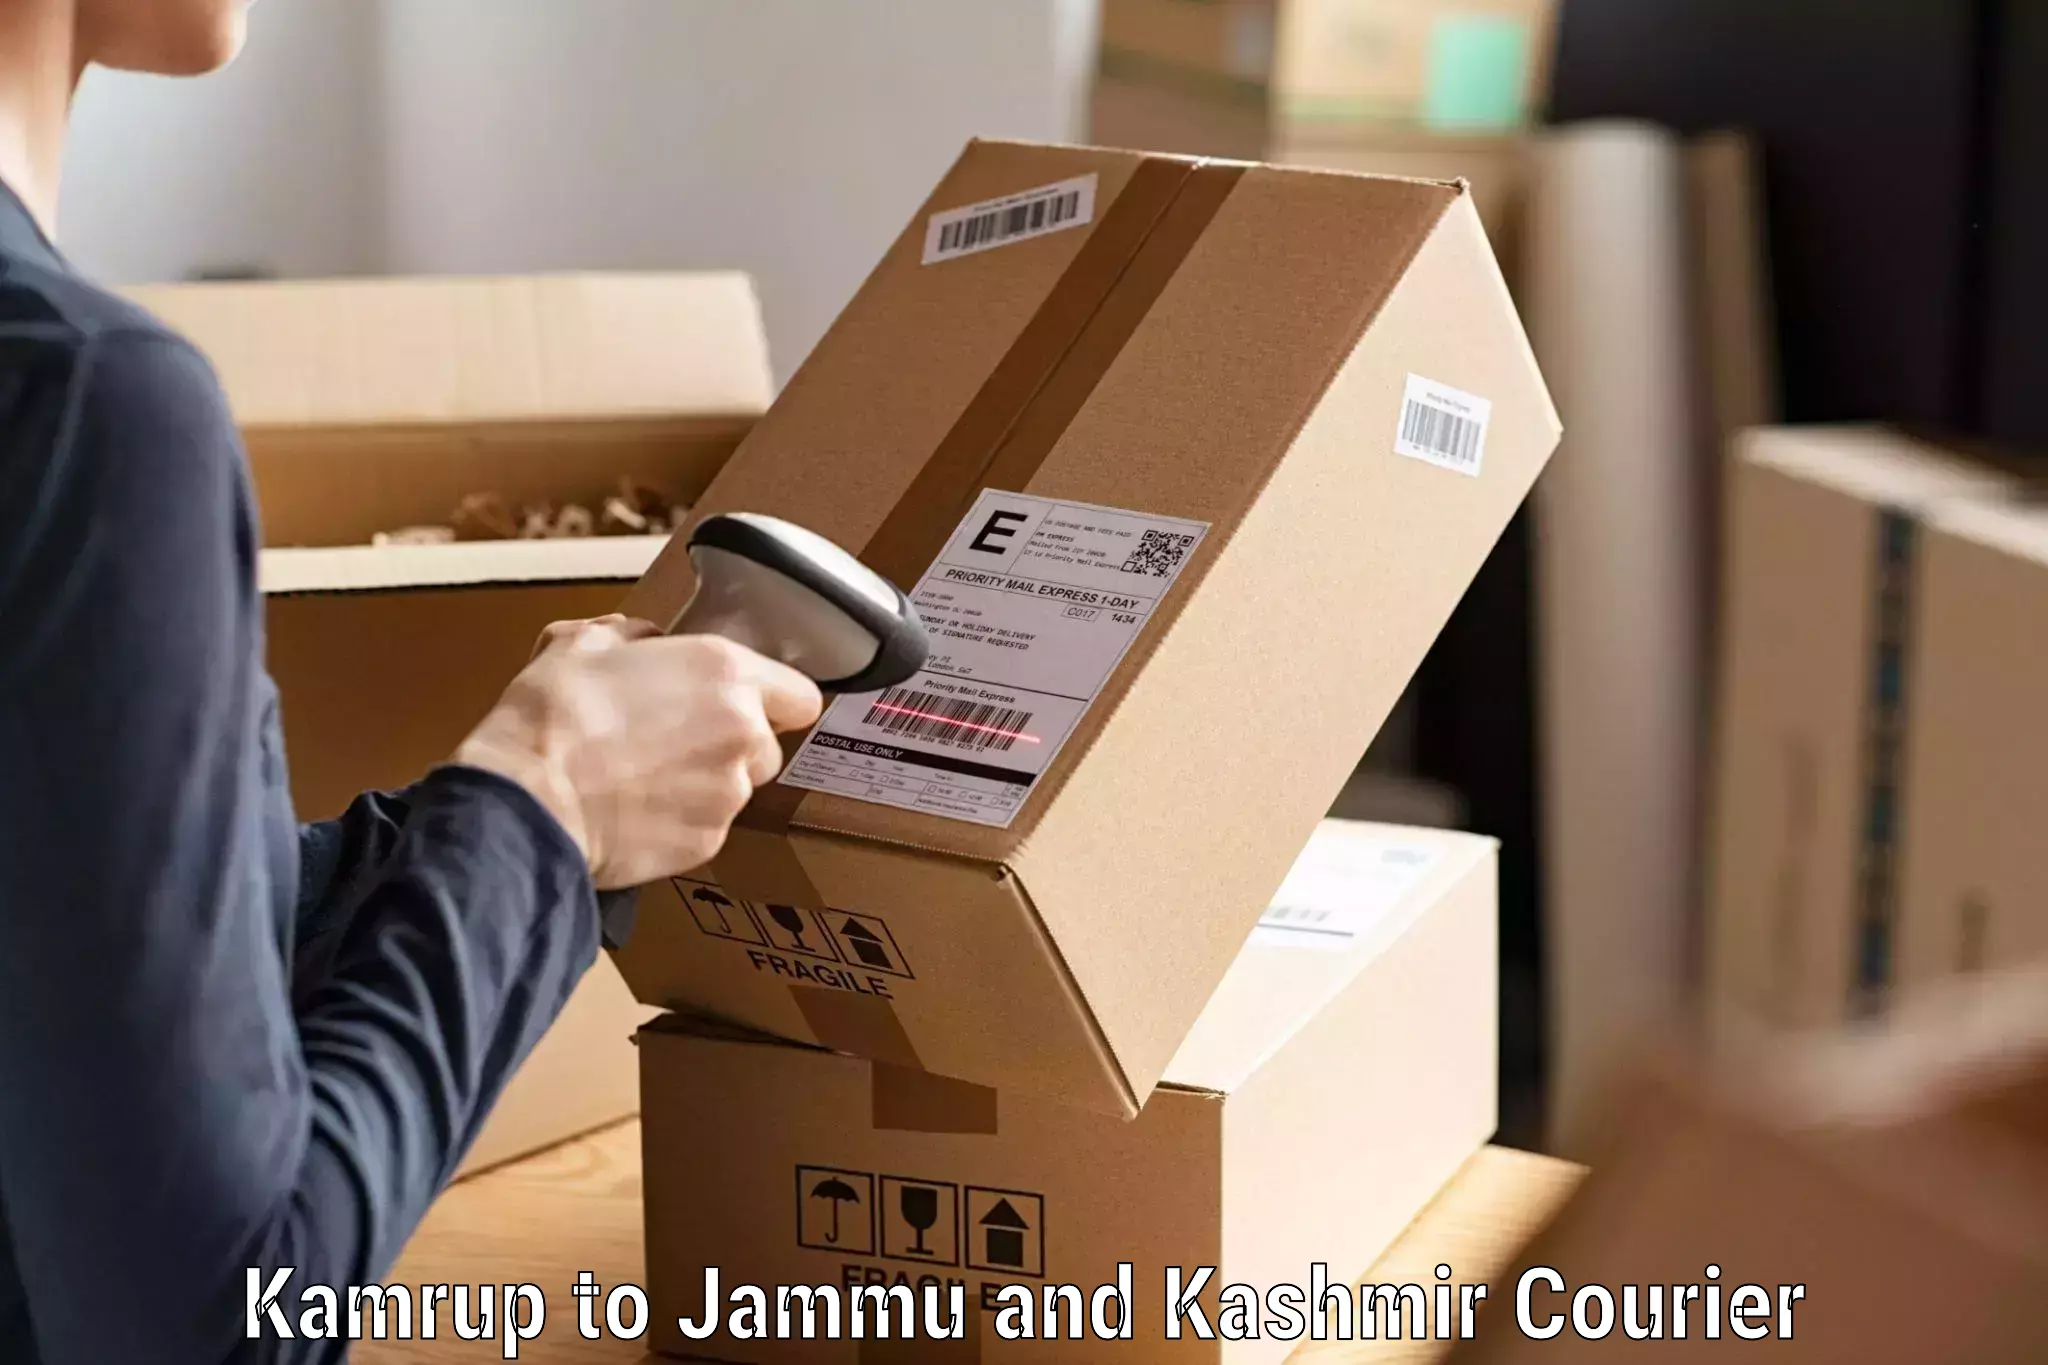 Courier service innovation Kamrup to Katra